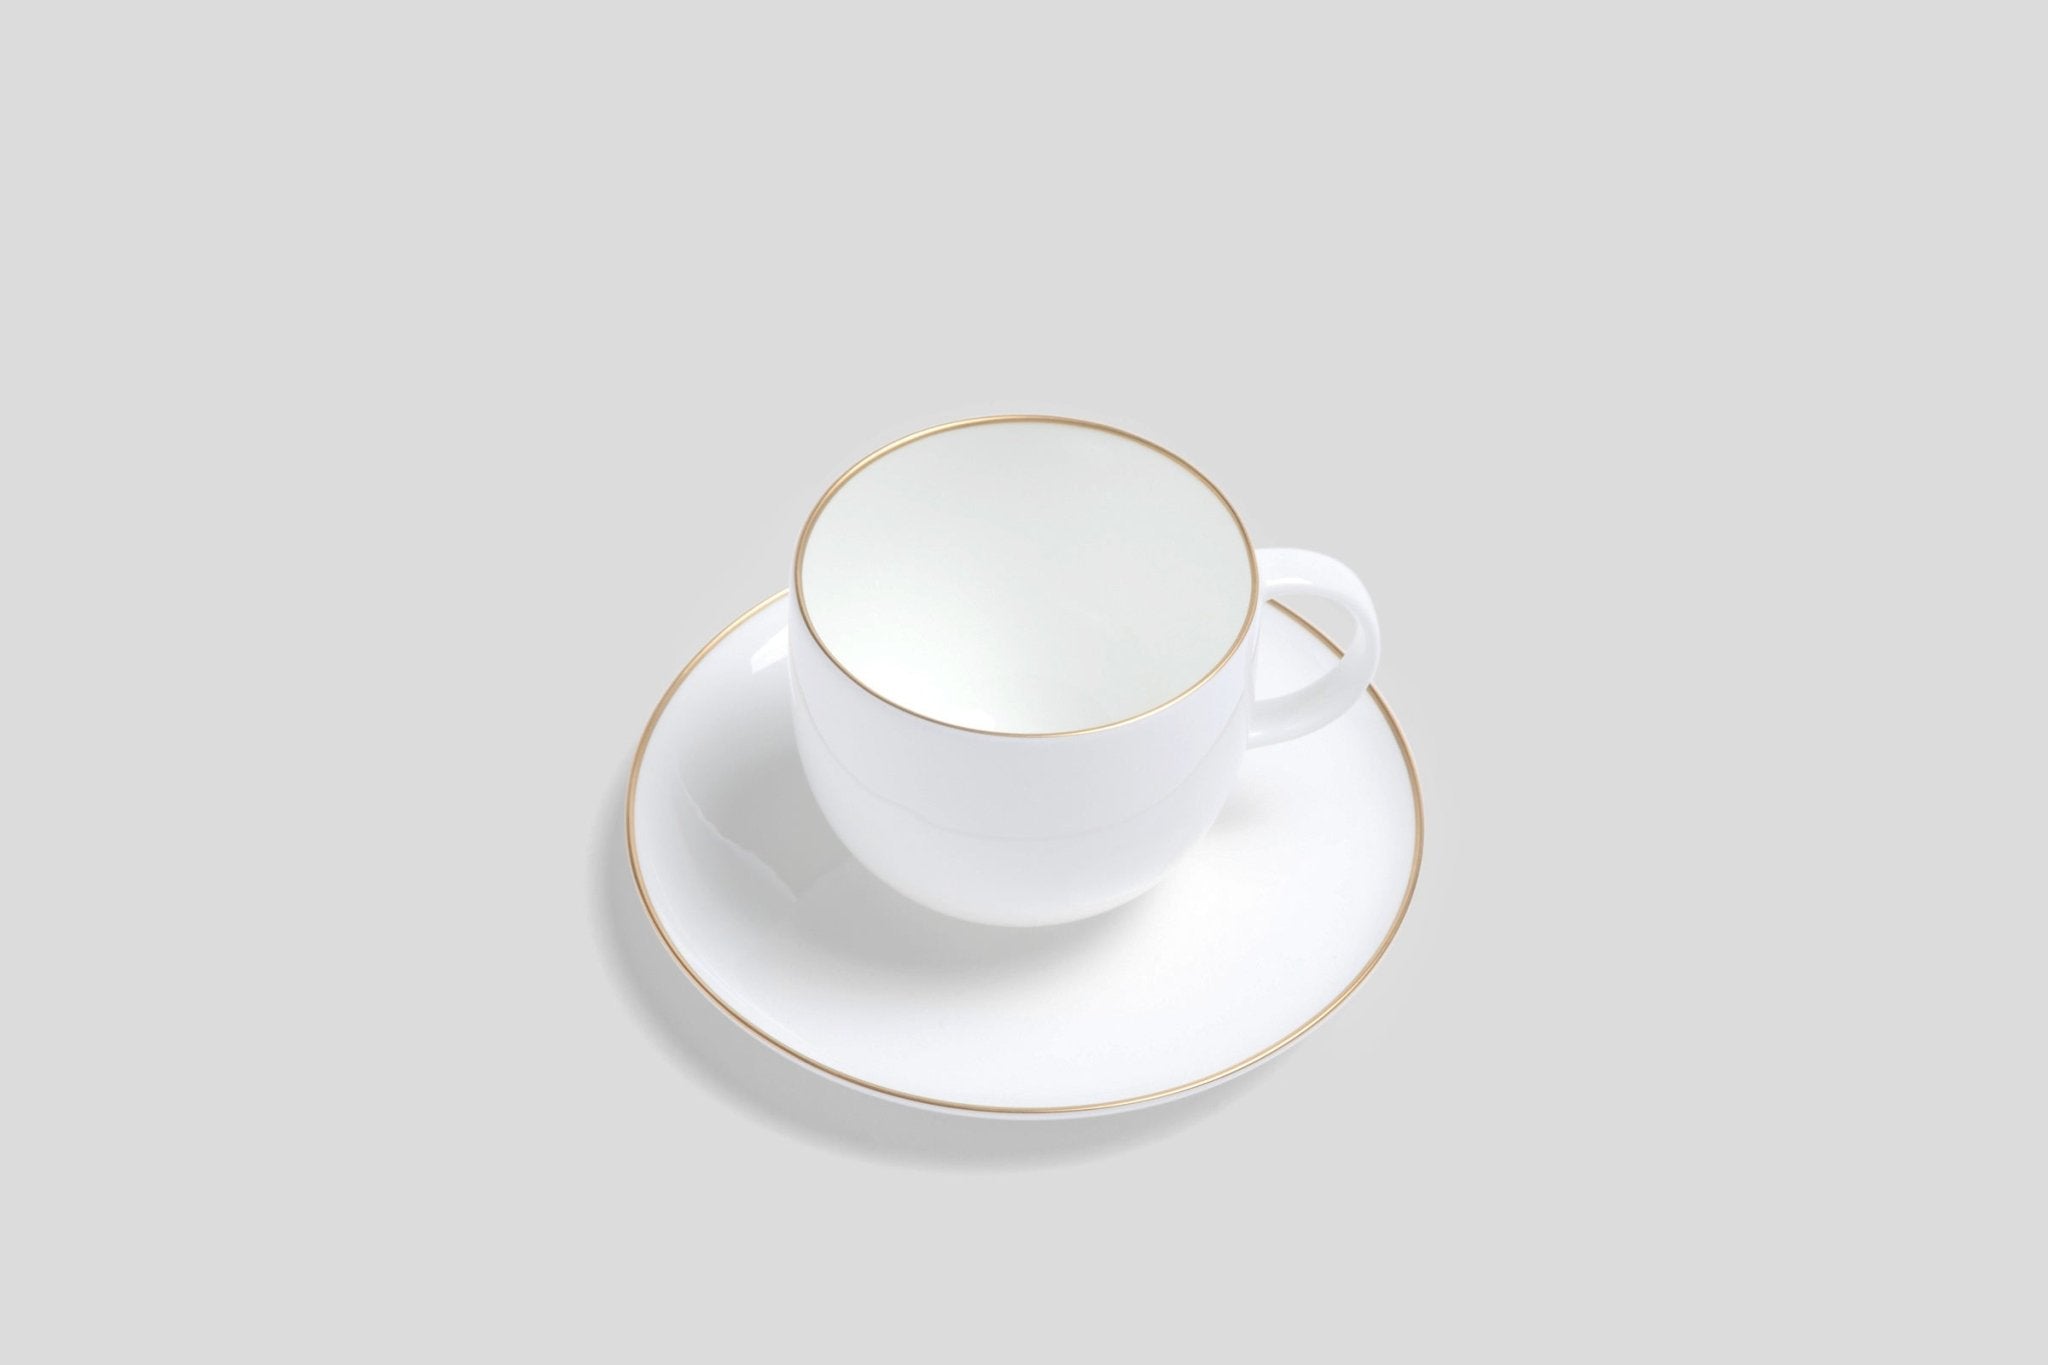 Designer-Luxury-Modern-Nikko Goldline Teacup & Saucer-Nikko-Goldline-Gold-Bodo Sperlein-Bone China-Designer-Luxury-Modern-Tasse-Becher-Kaffee Tasse